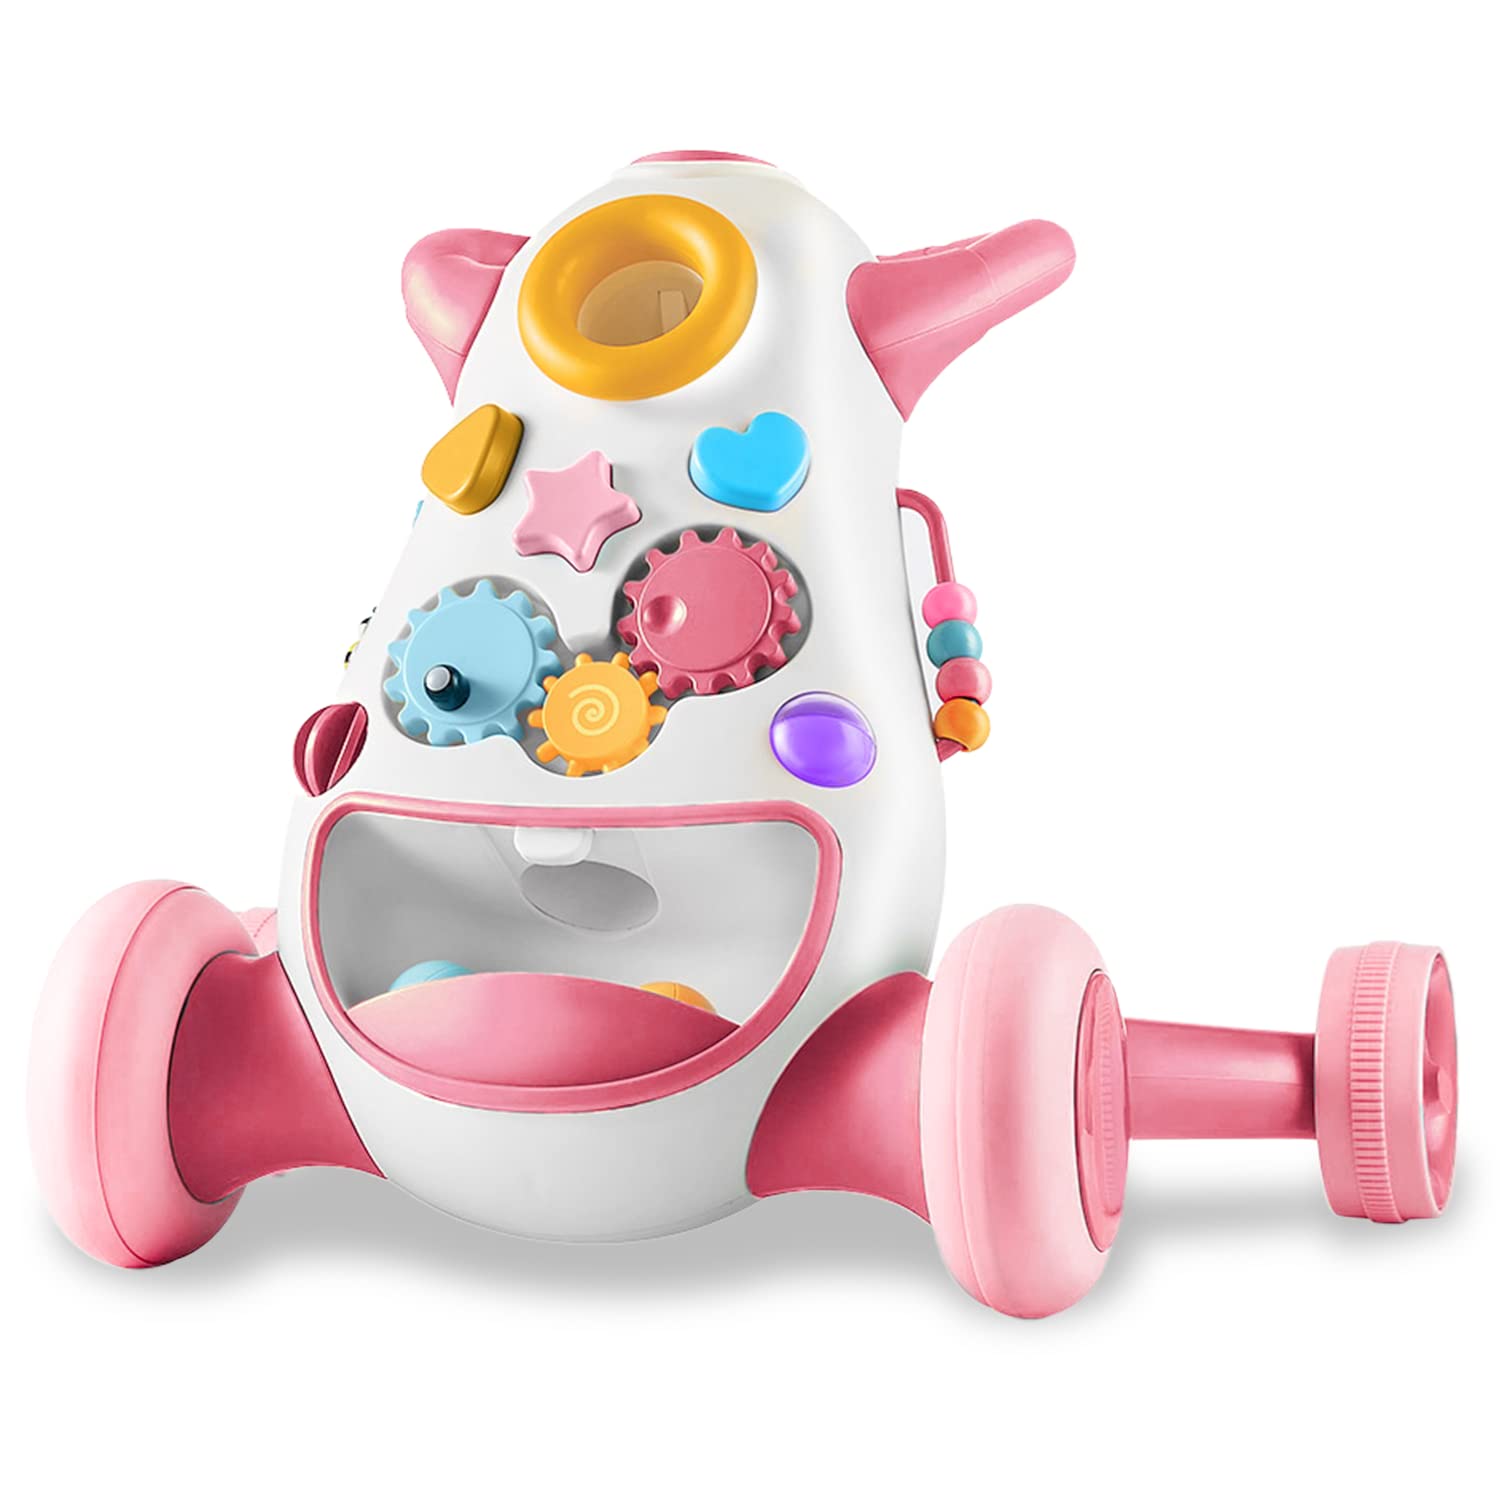 KAB Interactive Baby Push Walker  Pink  Locking Wheels  Safe & Stable Design  Activity Walker  Baby Walker Toy  Toddler Push Toy